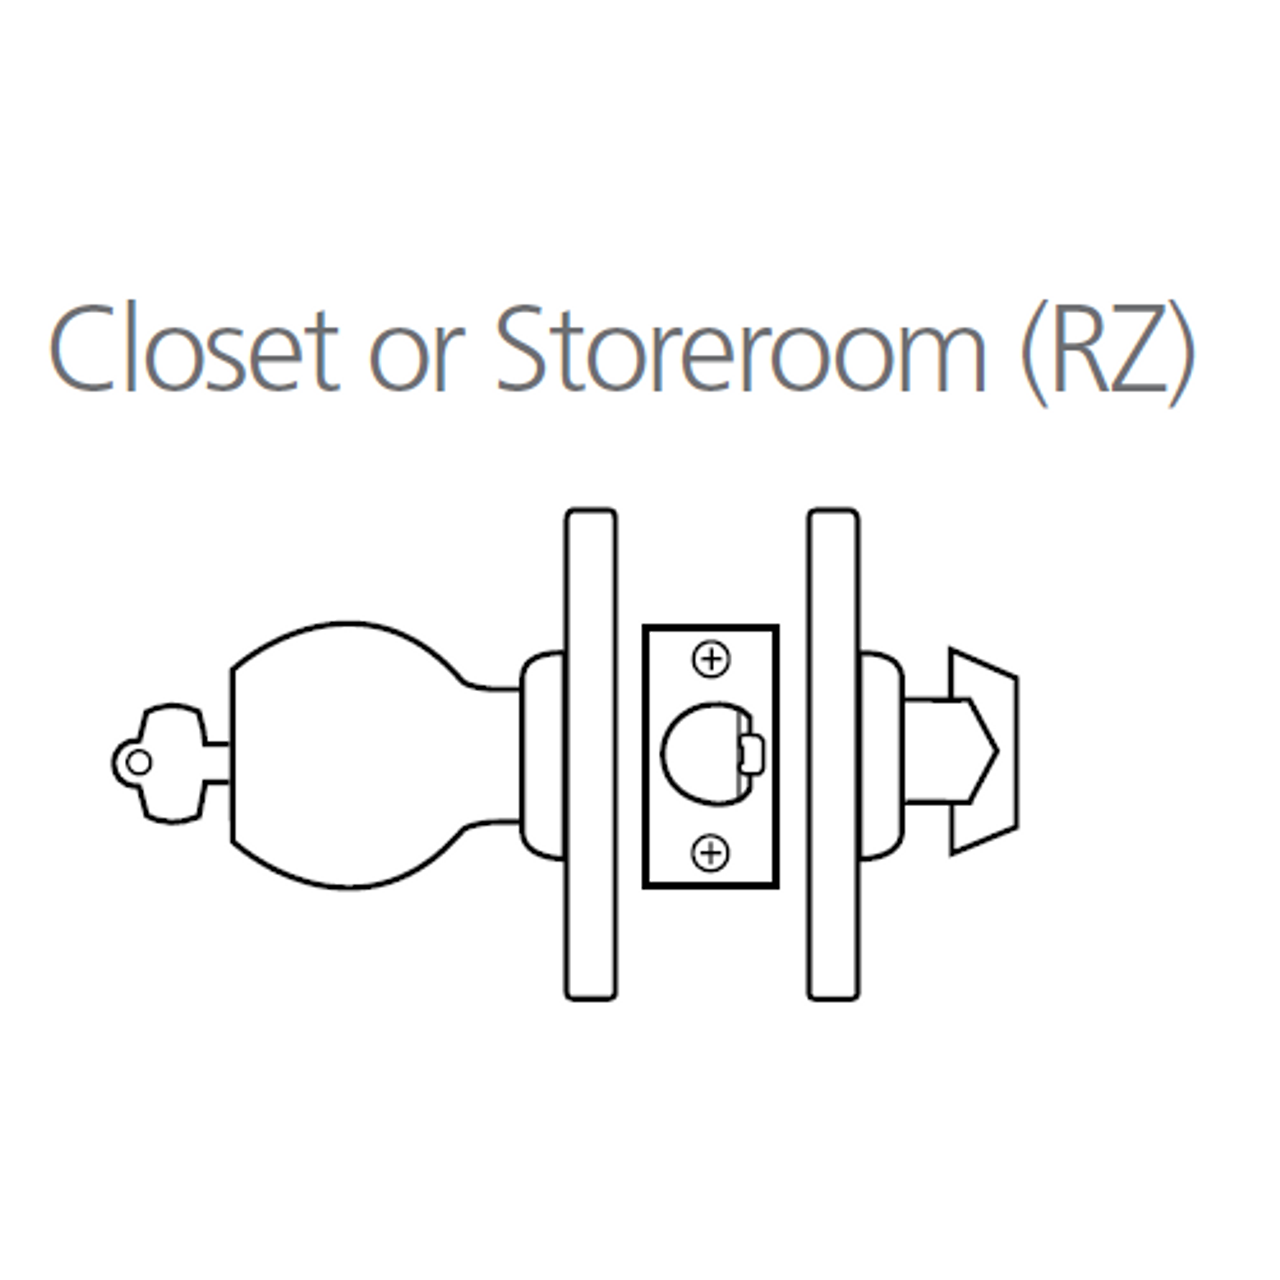 8K57RZ4CS3626 Best 8K Series Closet or Storeroom Heavy Duty Cylindrical Knob Locks with Round Style in Satin Chrome